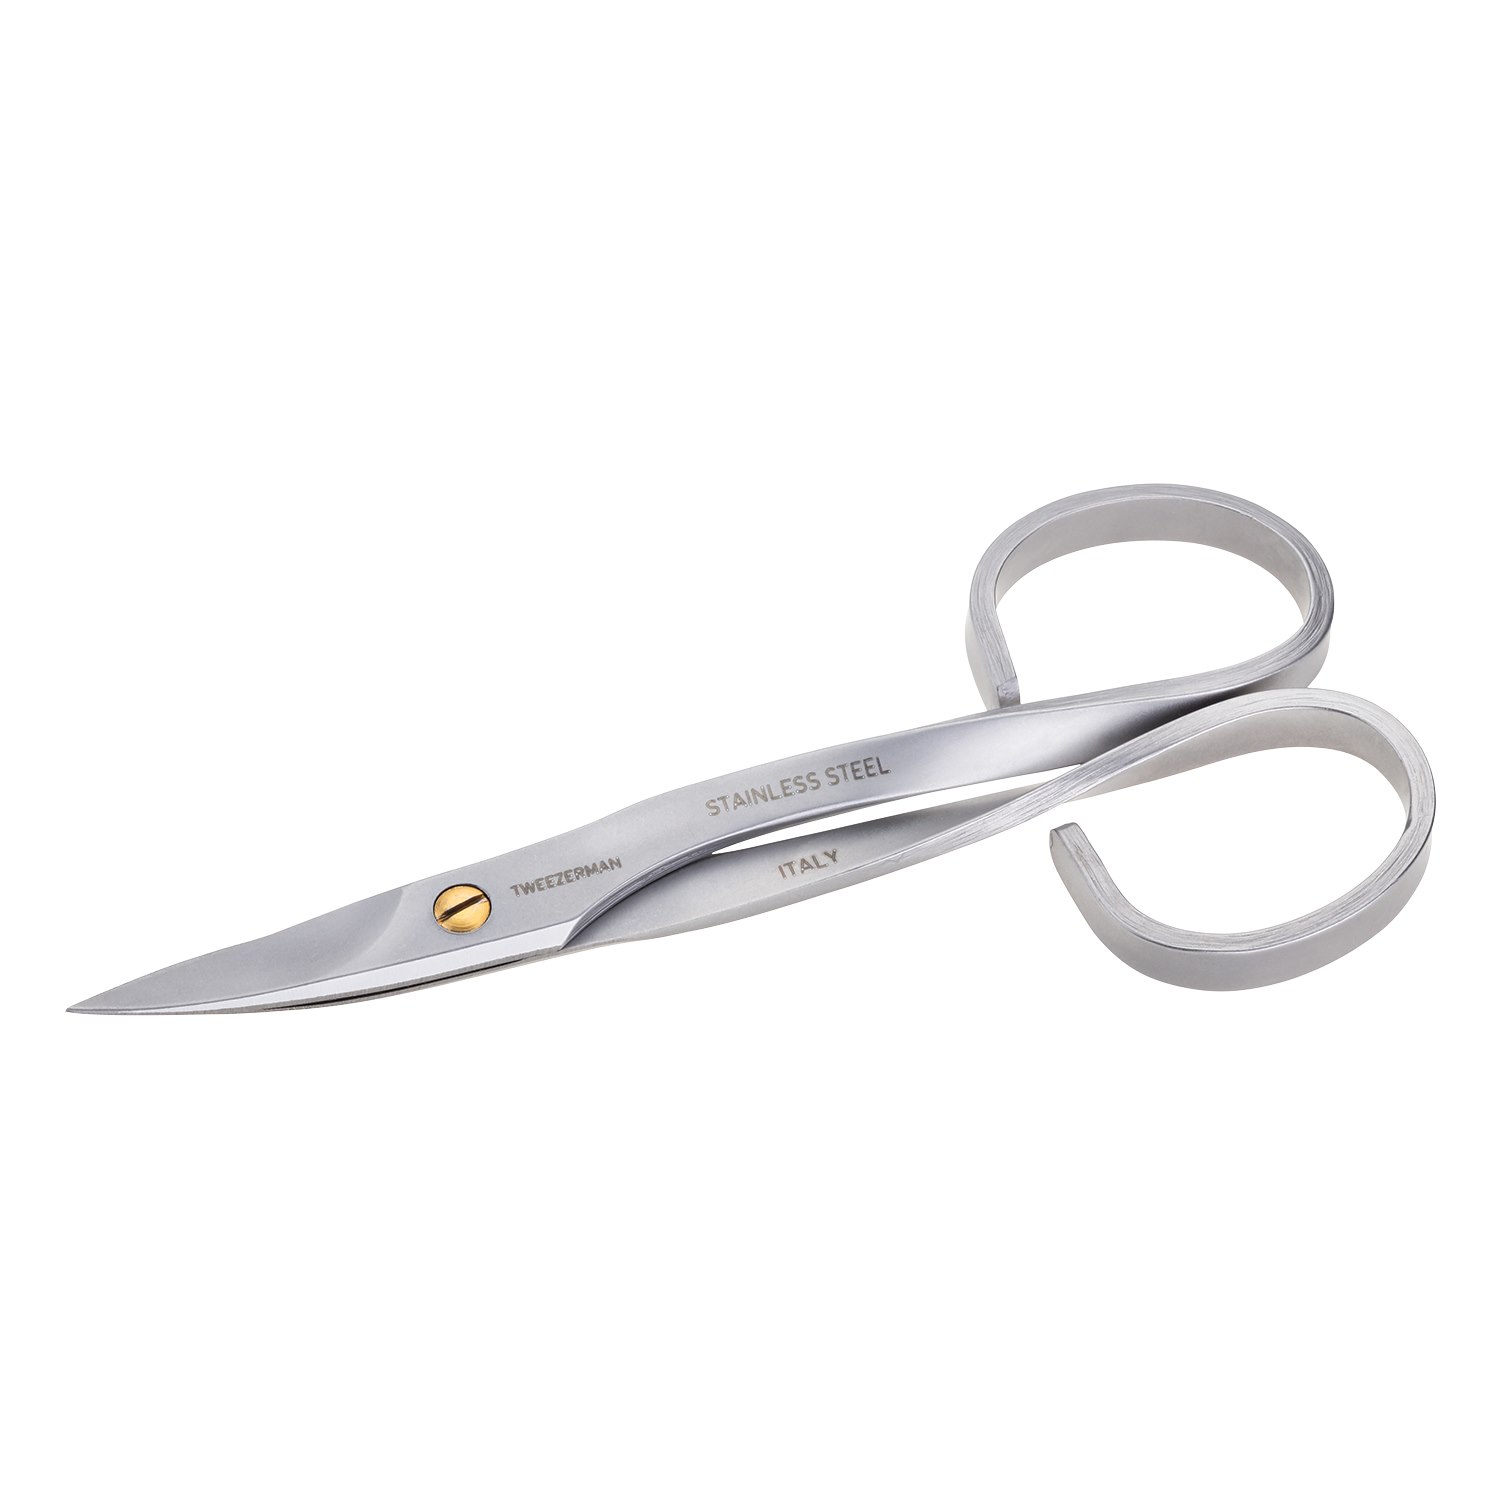 Tweezerman Stainless Steel Nail Scissors